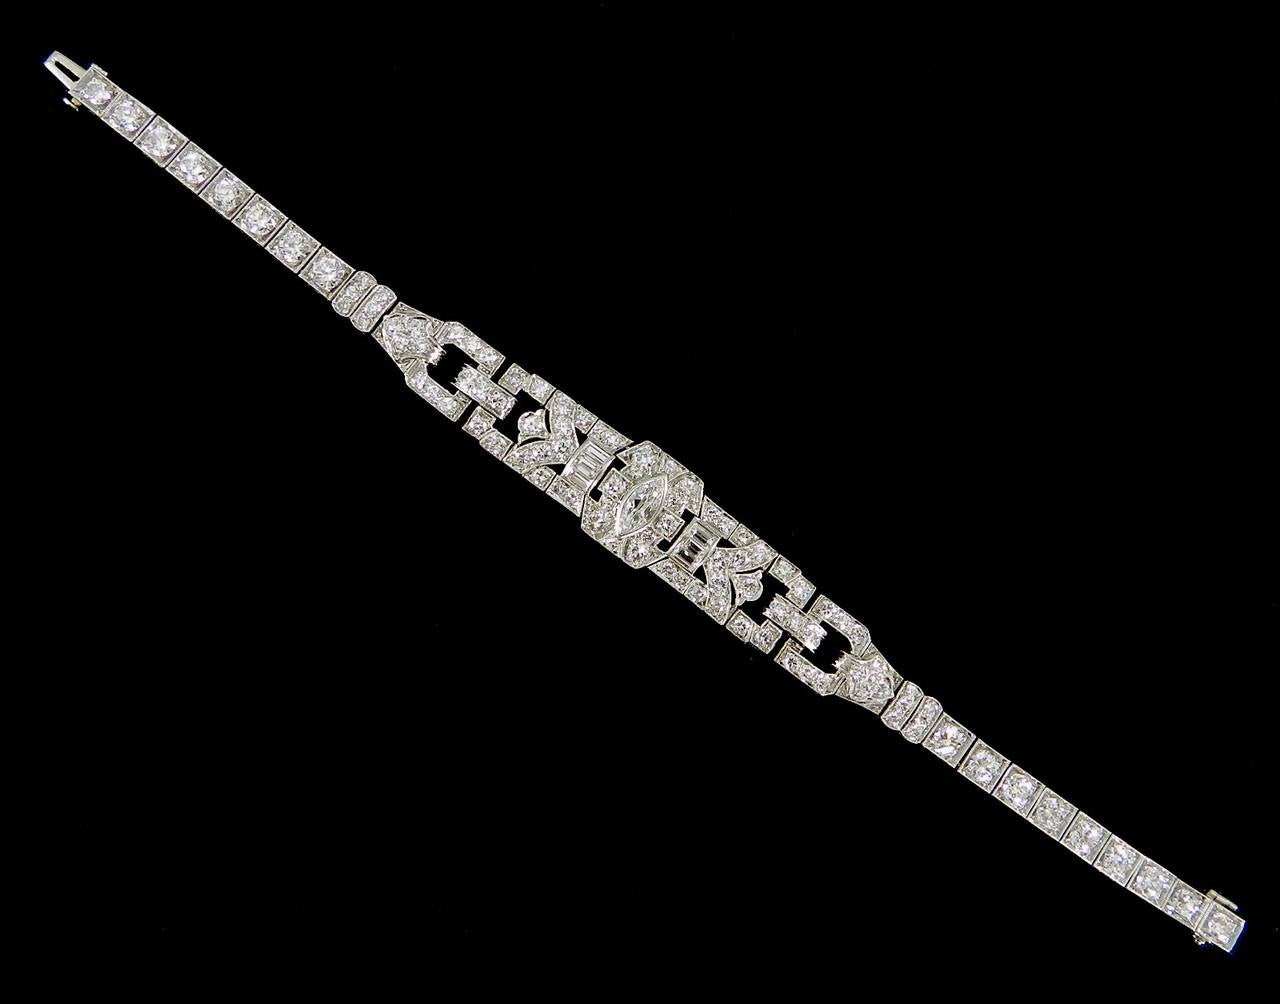 Art Deco platinum and diamond bracelet. Centre diamond (0.5 carat) plus other diamonds (6.25 carats) equals 6.75 carat total weight.  Bracelet weighs 22.2 grams. Interior circumference 6.5